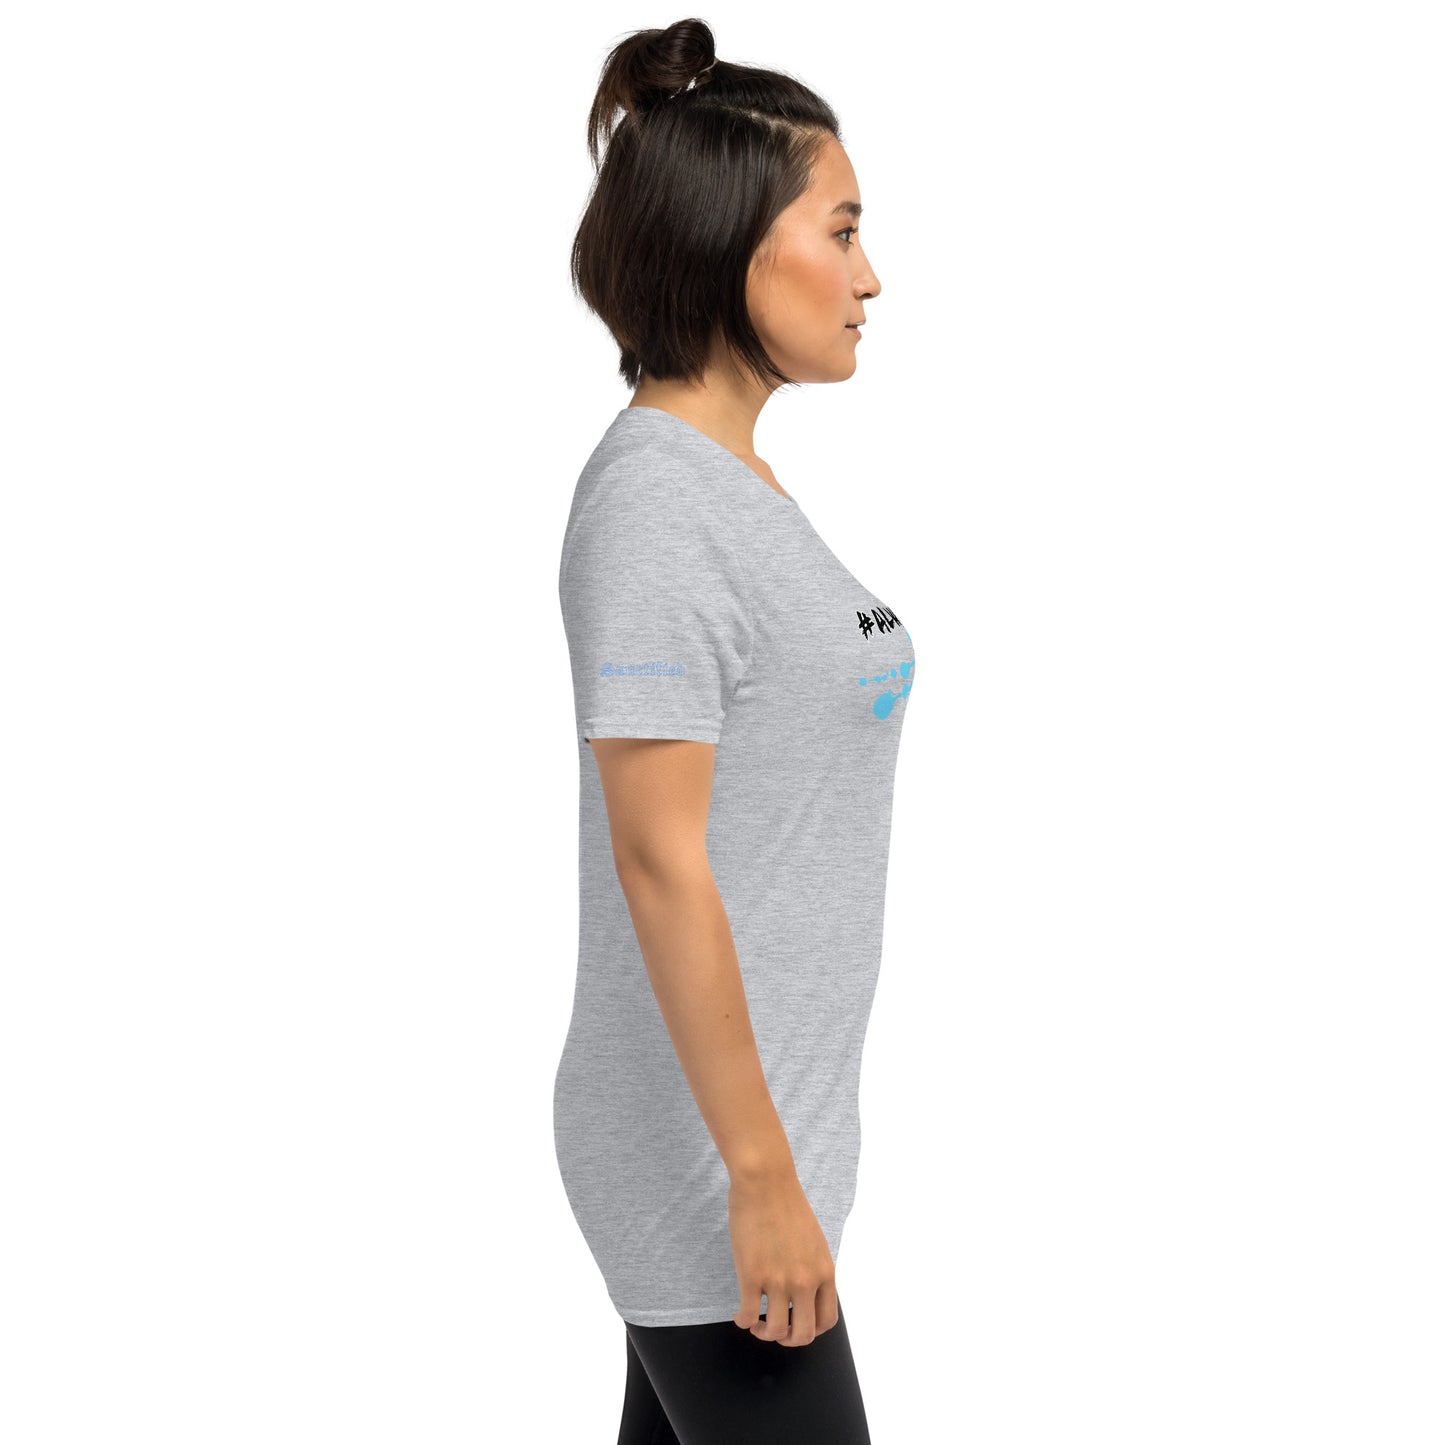 #ALWAYSPRAISE- Short-Sleeve Unisex T-Shirt